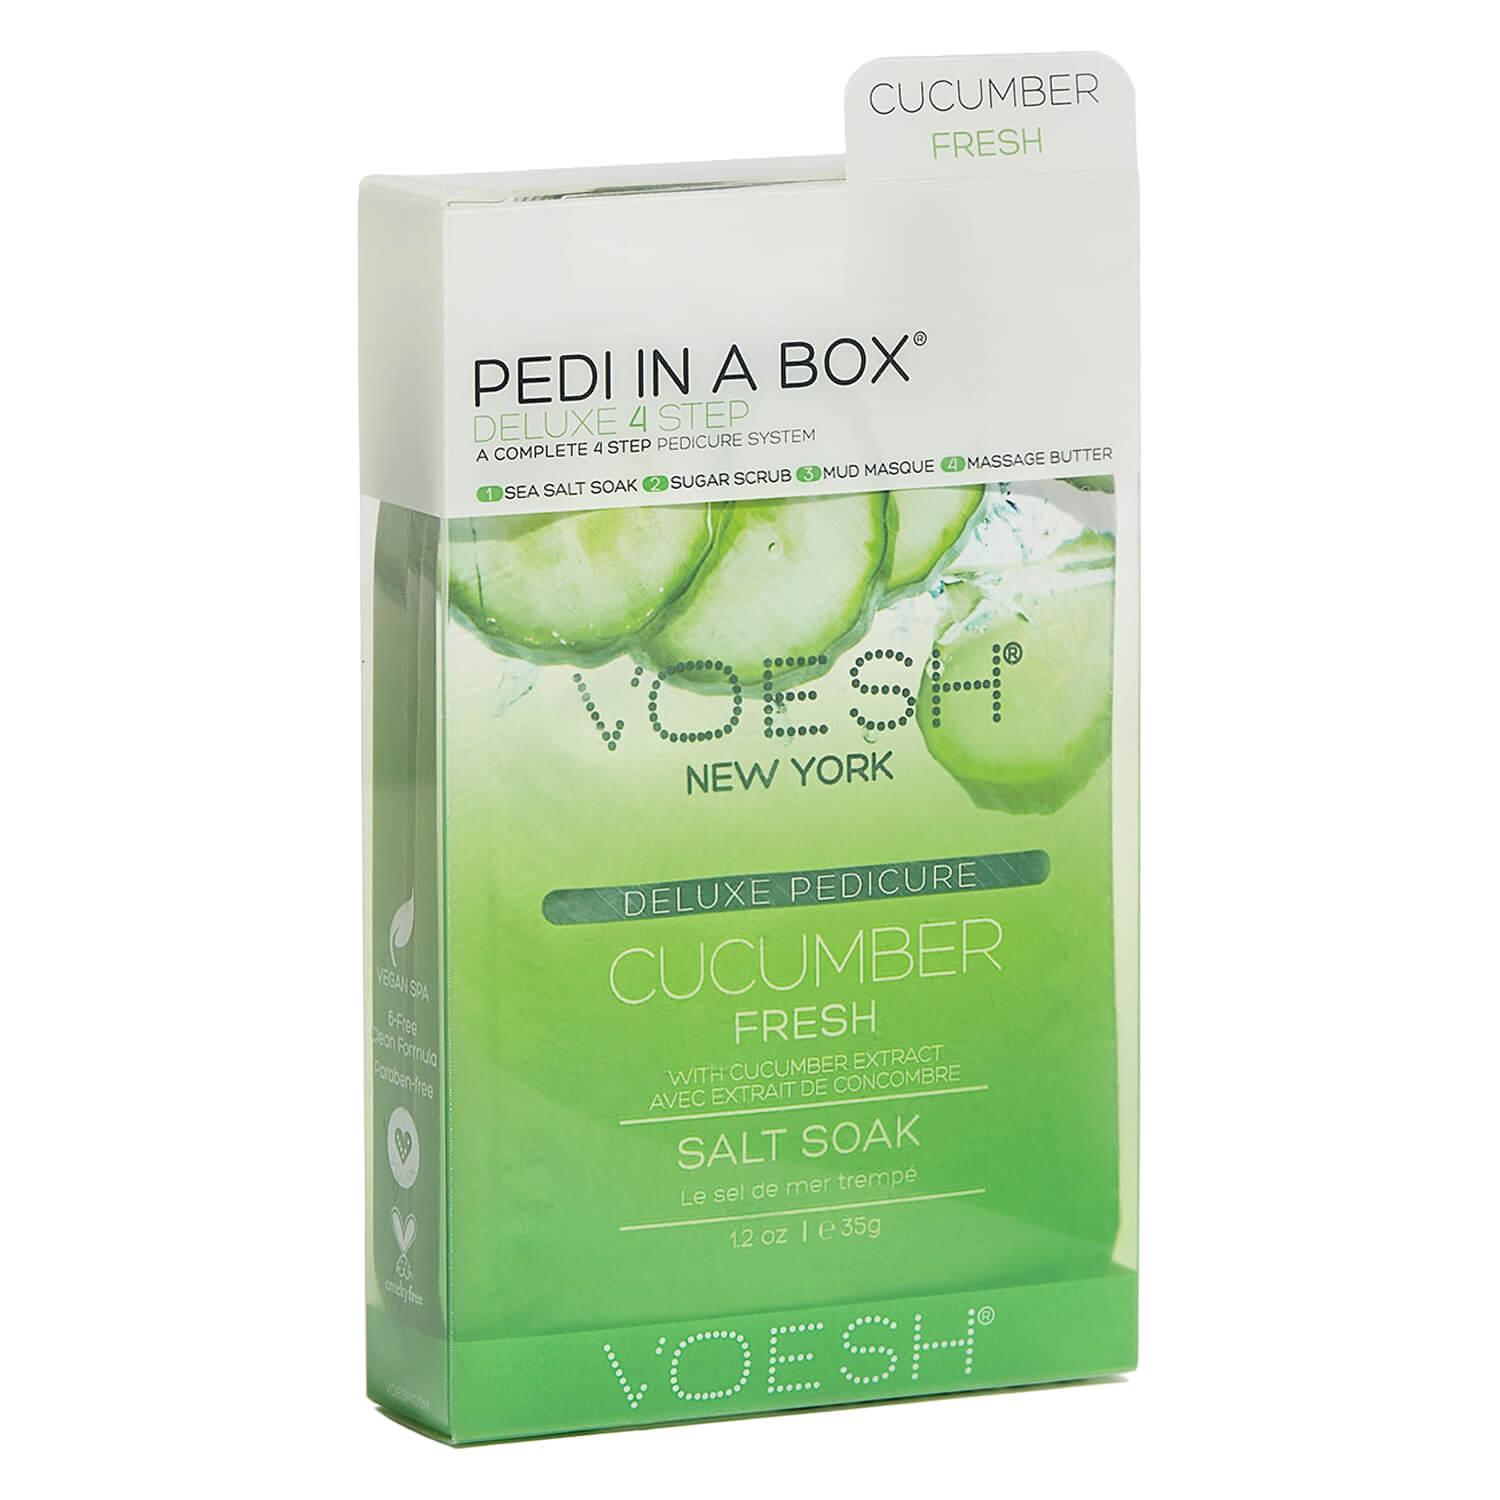 VOESH New York - Pedi In A Box 4 Step Cucumber Fresh